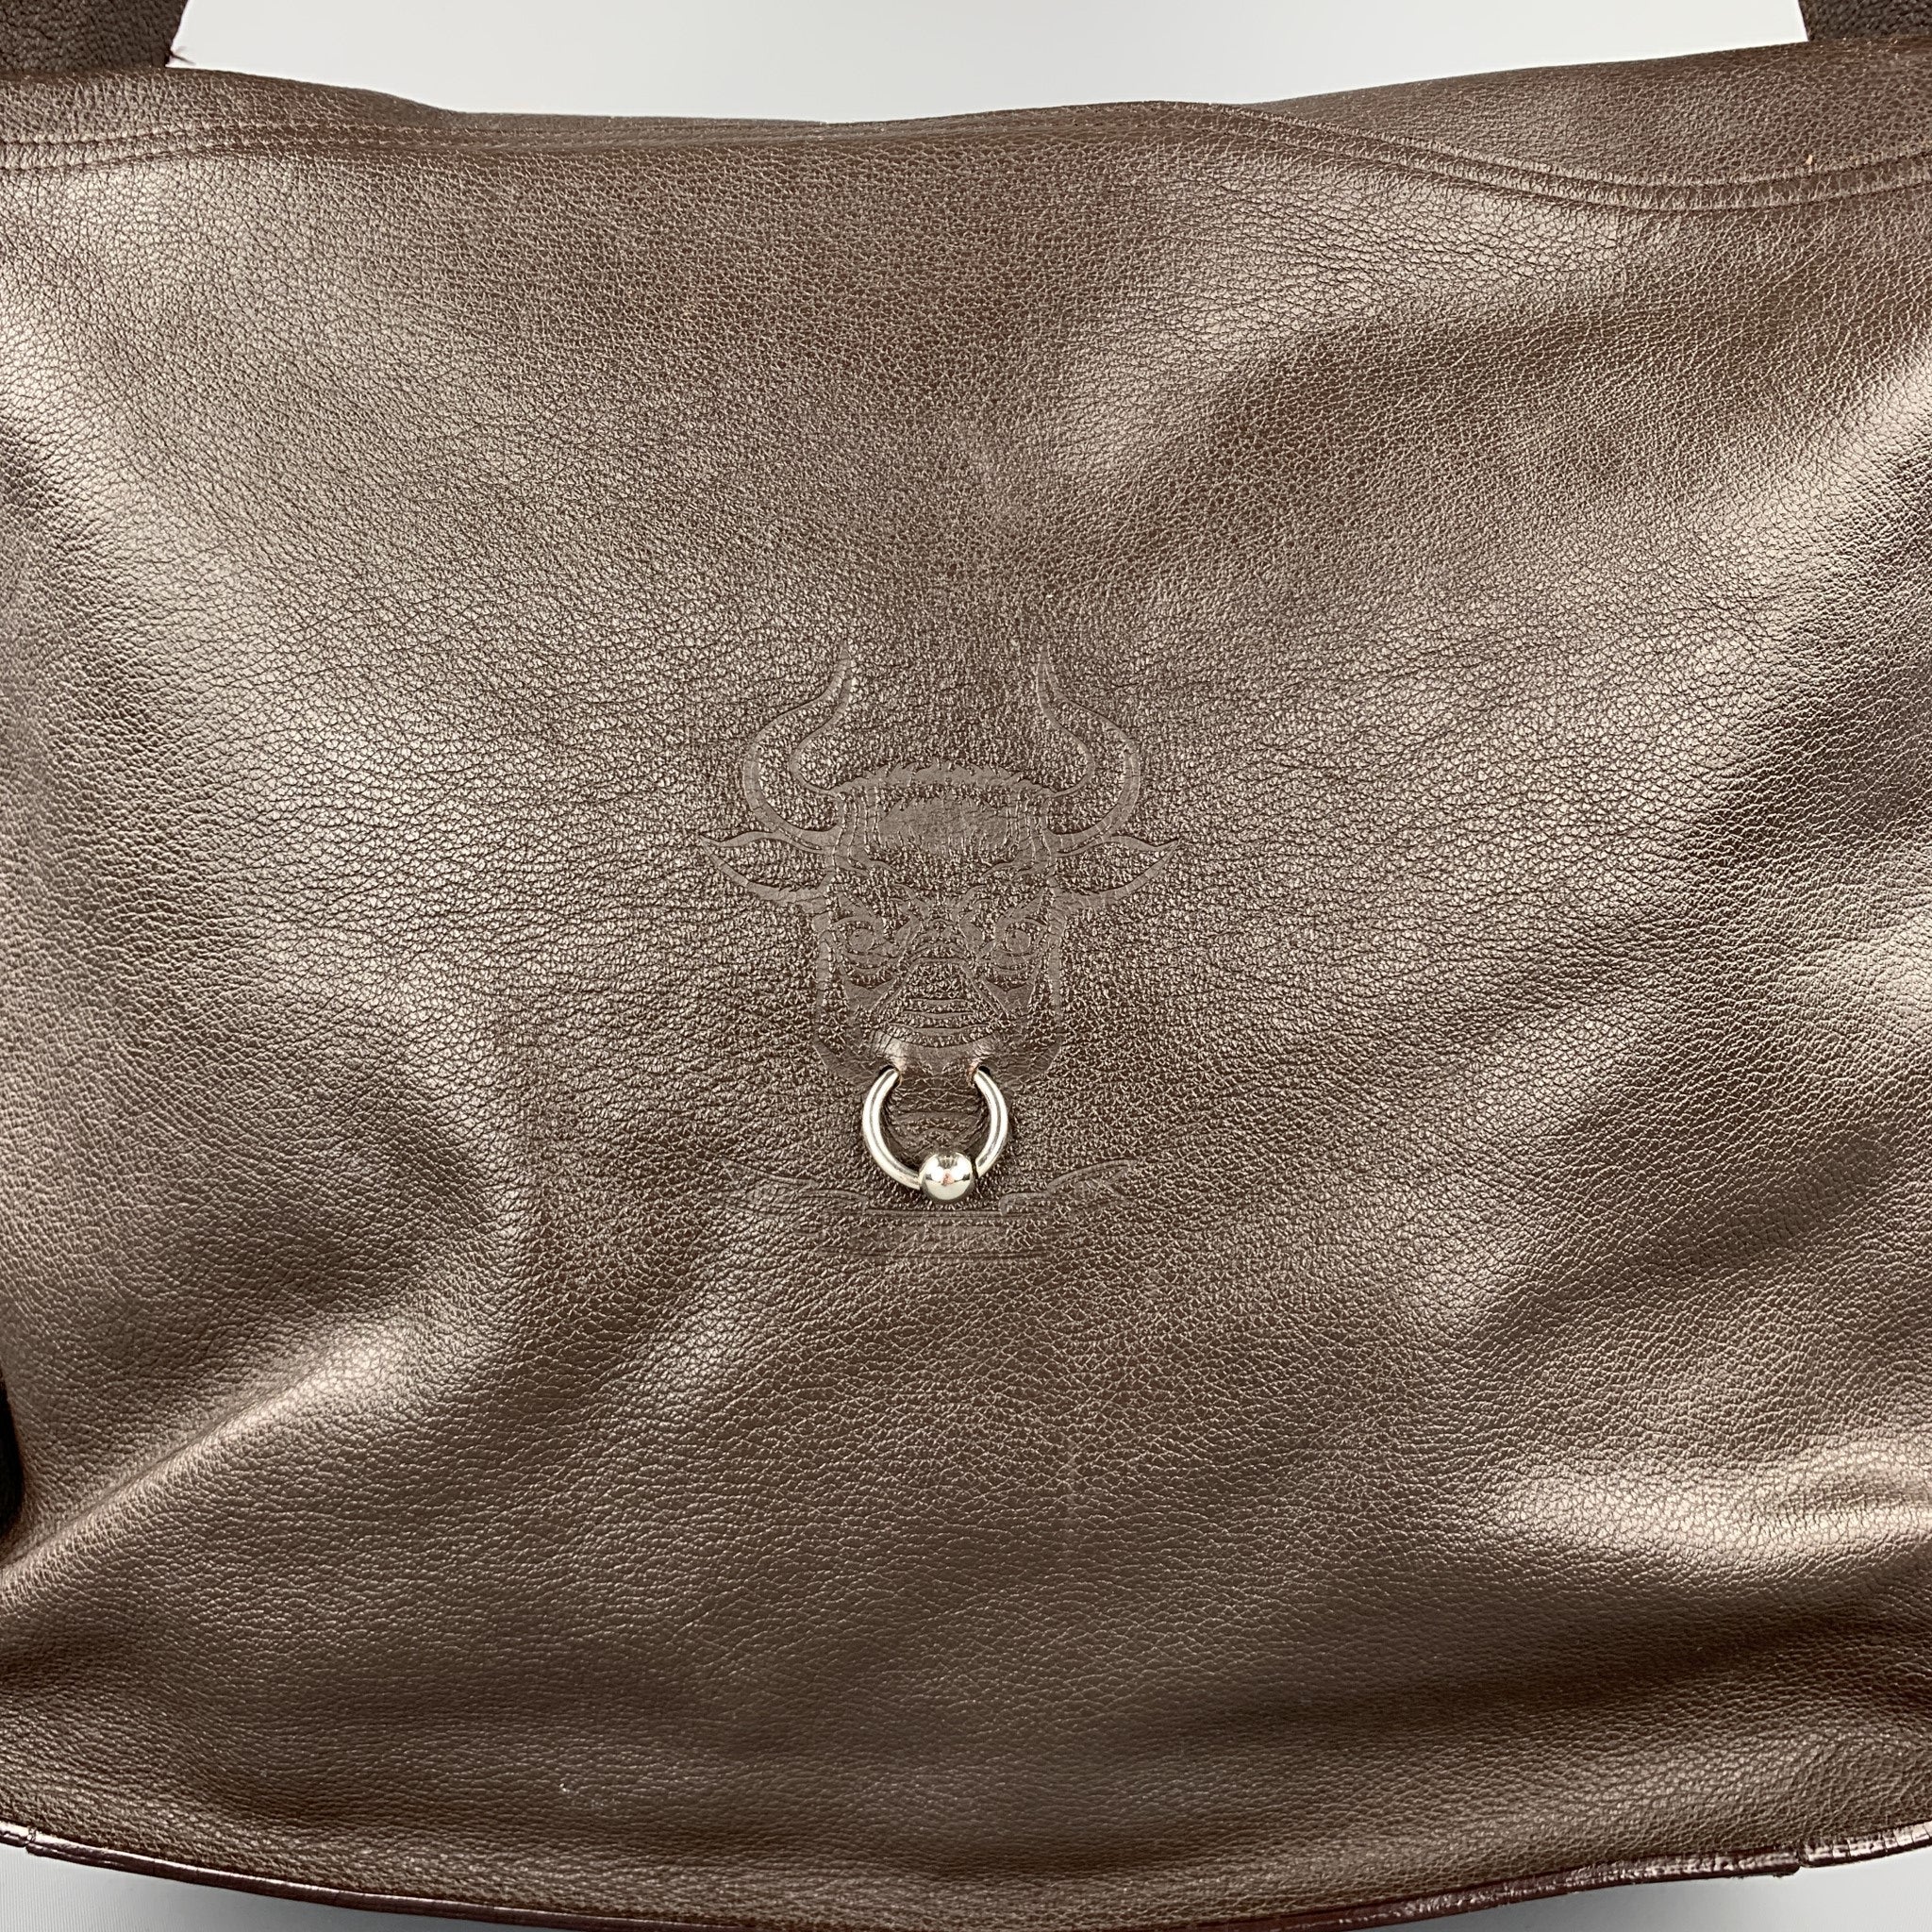 Mini Jean Paul Gaultier bag for women | Imparfaite